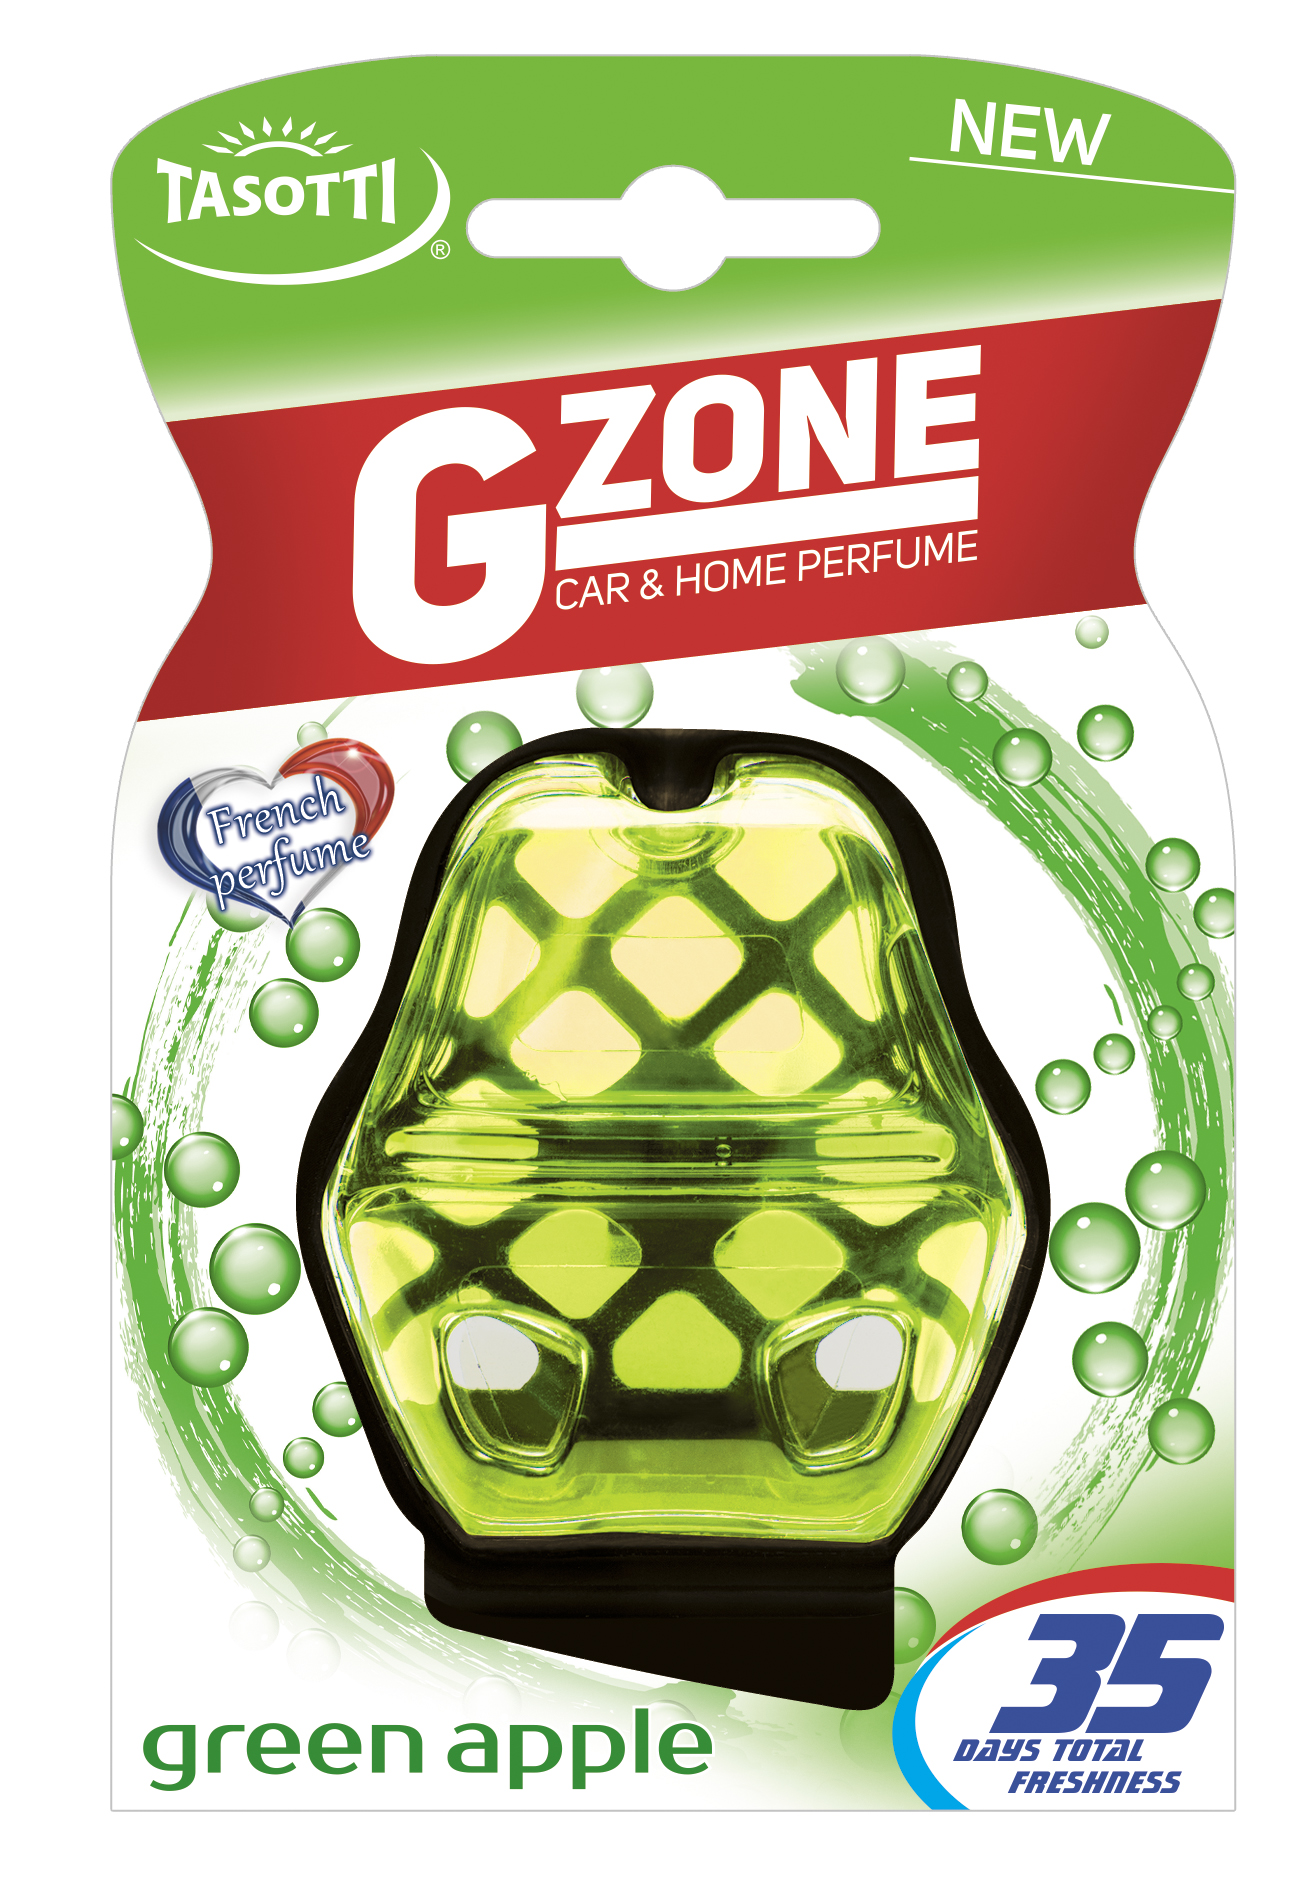 GZone - Green apple